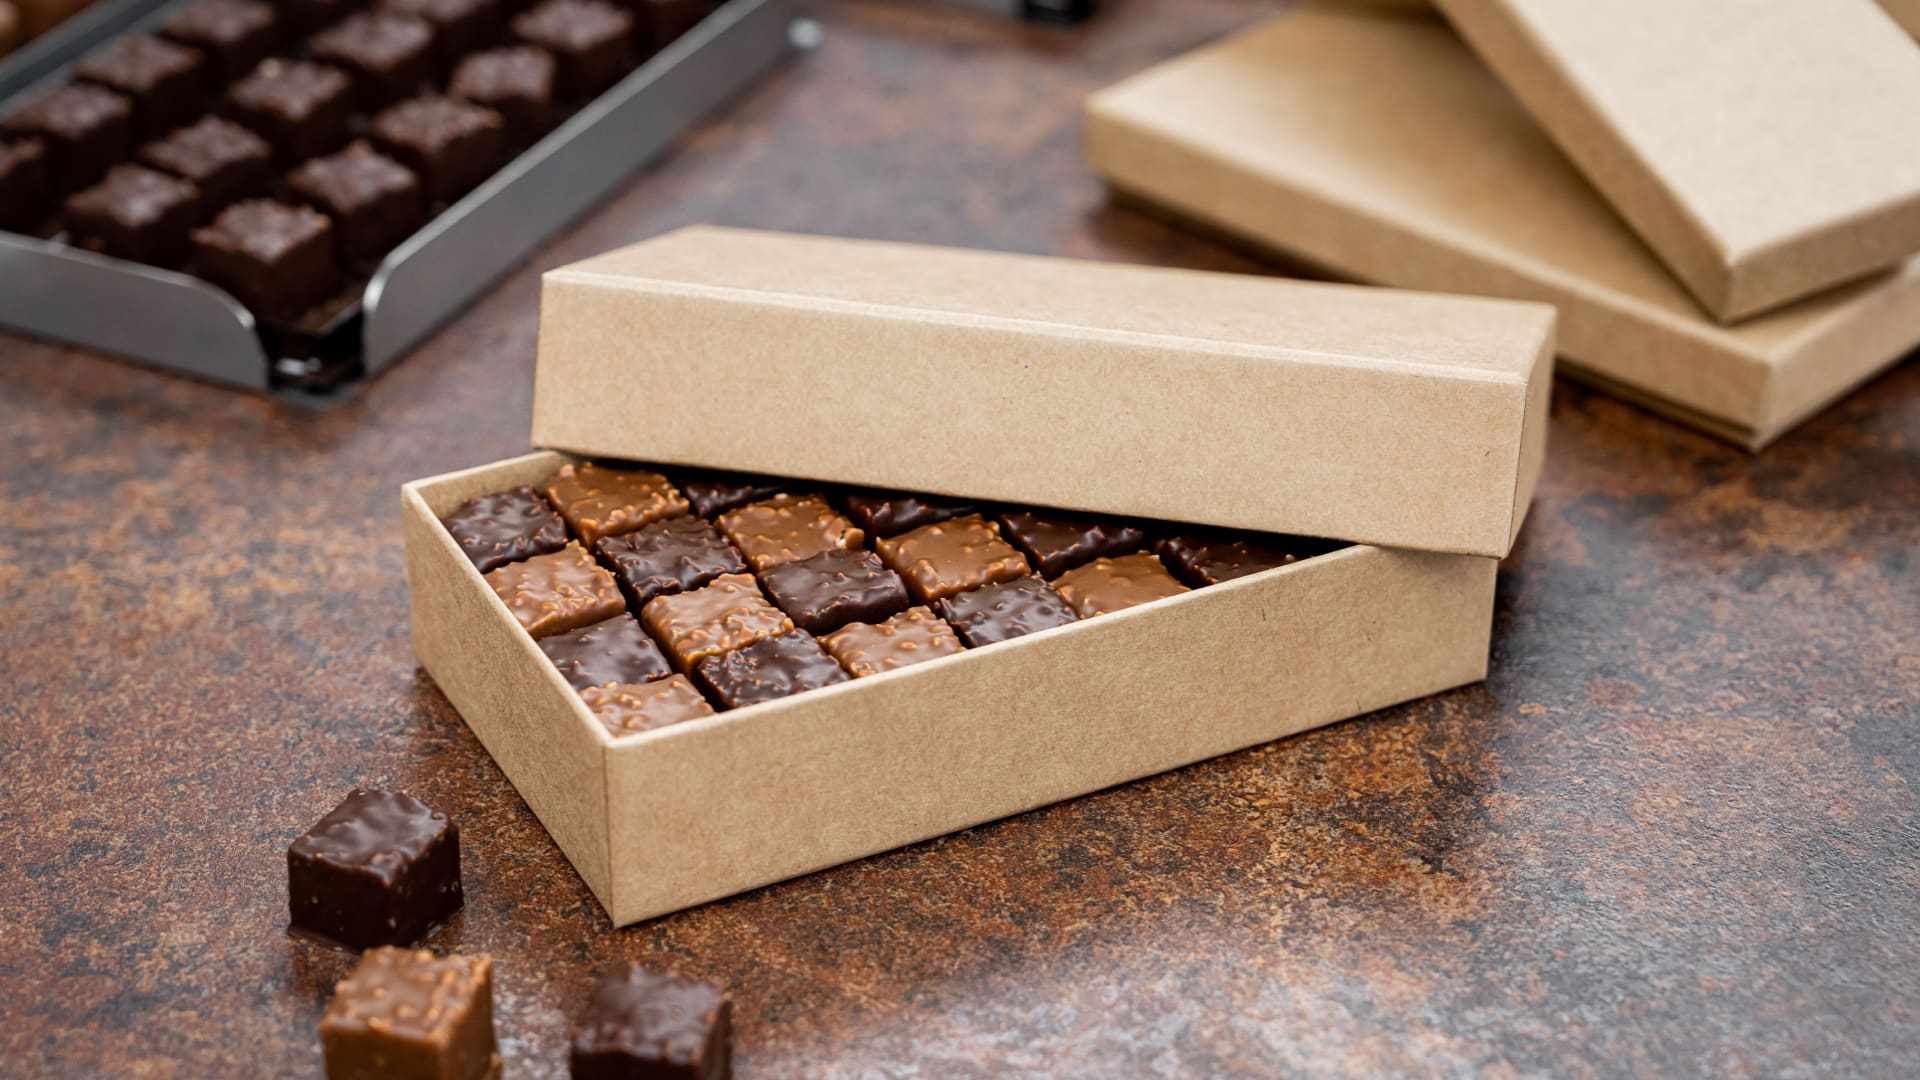 rectangle cardboard box with chocolate inside